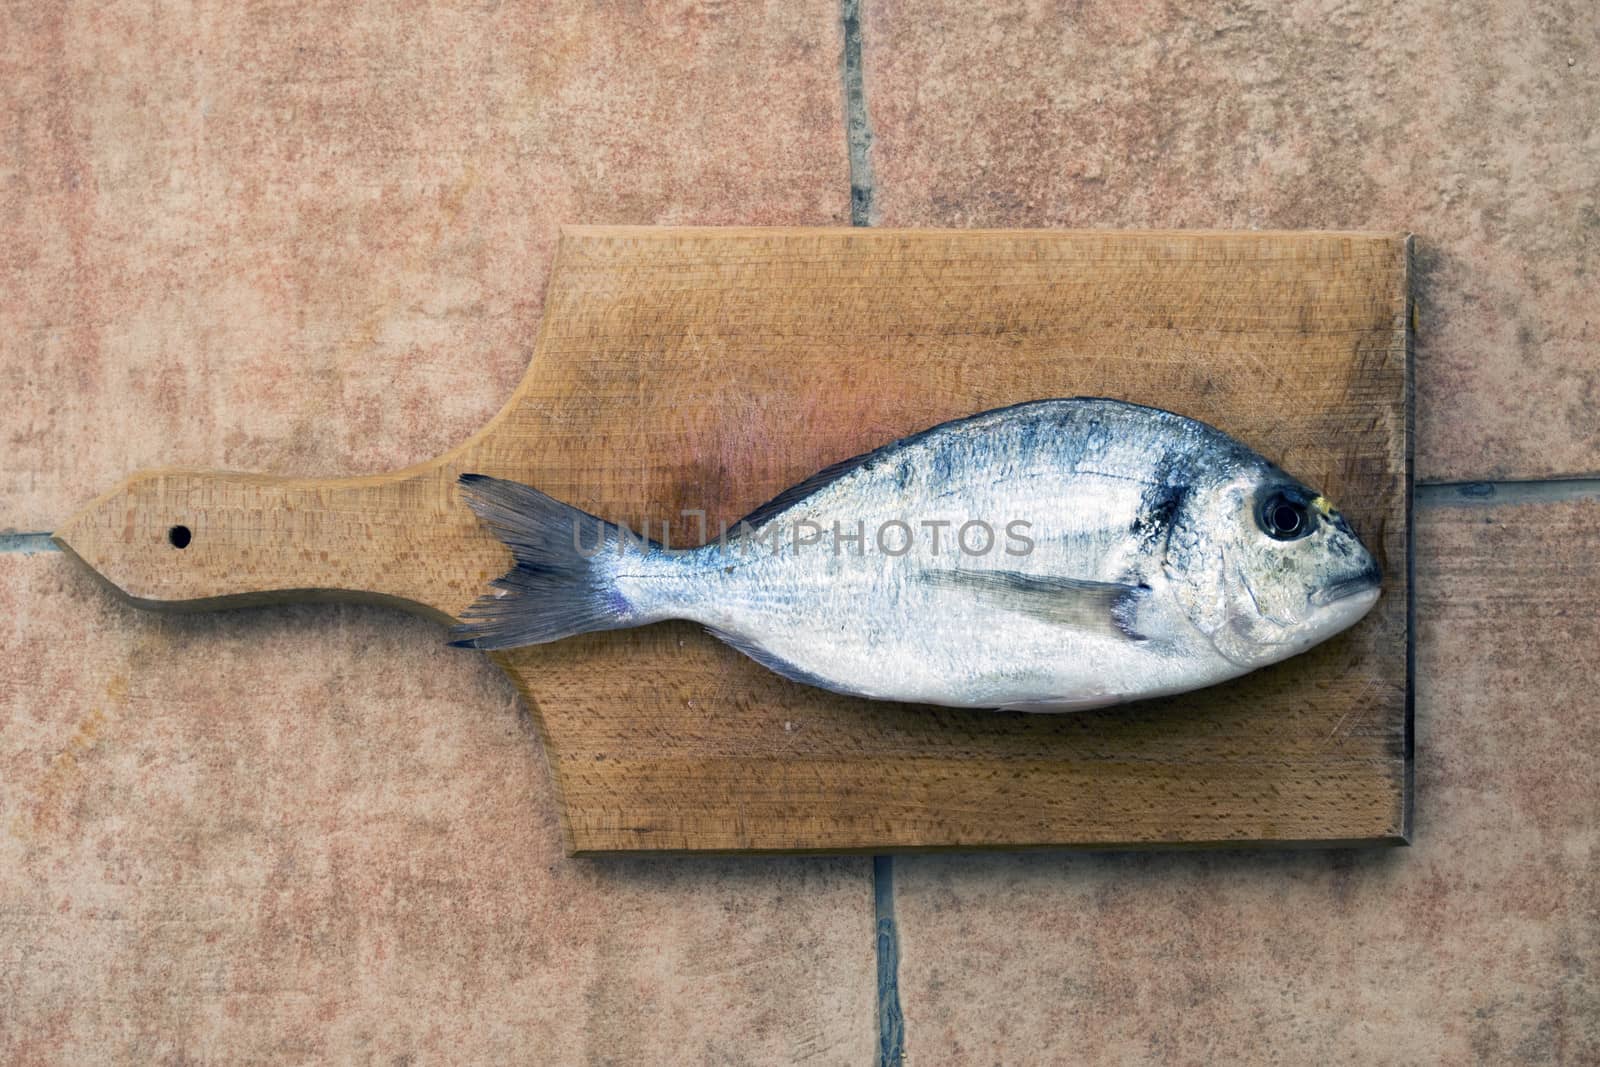 Gilthead seabream fish (Dourada or Sparus aurata) on the cutting board